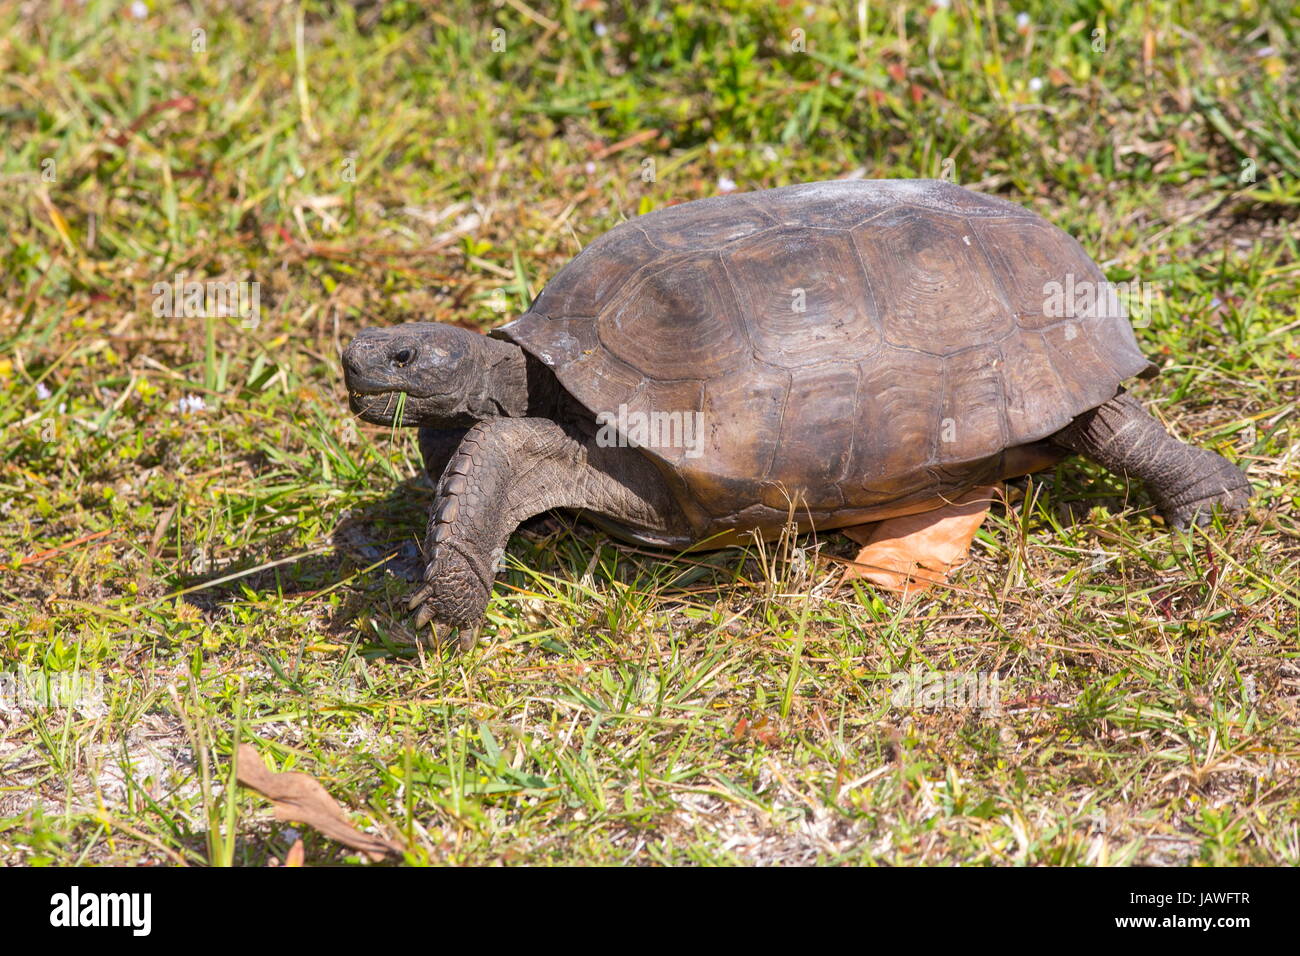 Una tartaruga di gopher, Gopherus polyphemus, passeggiate in erba. Foto Stock